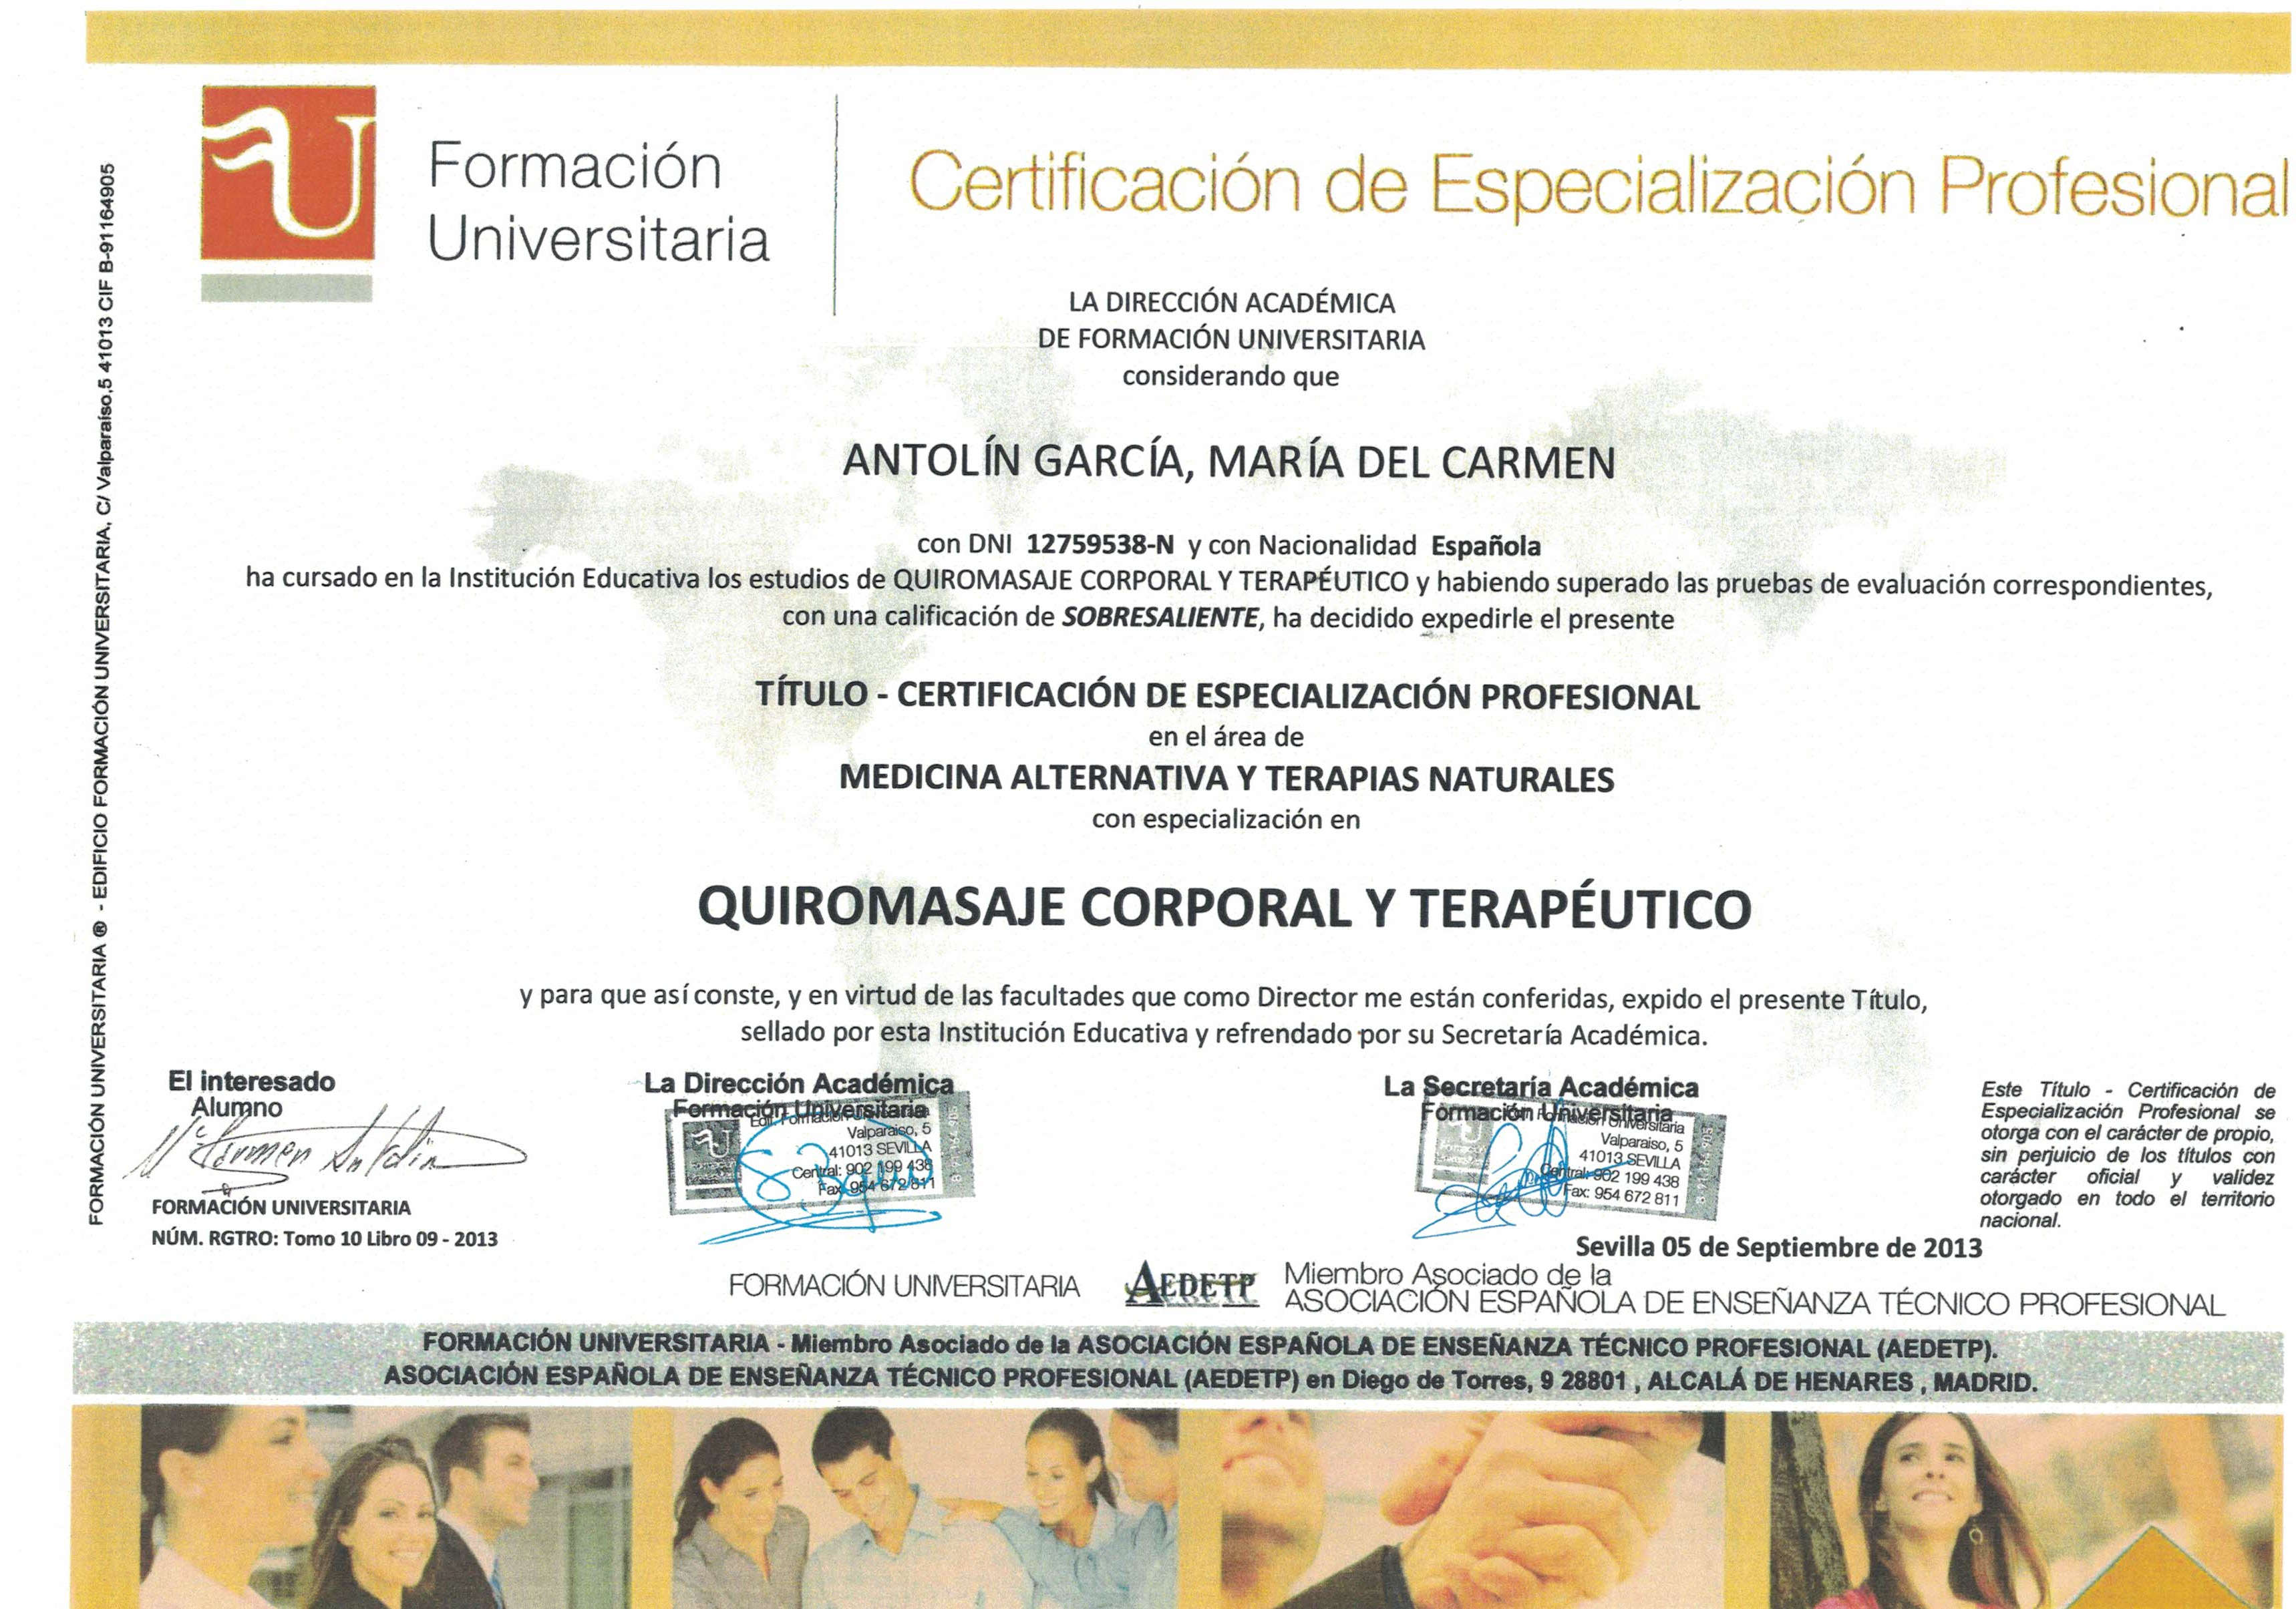 Título Certificación de Especialización Profesional